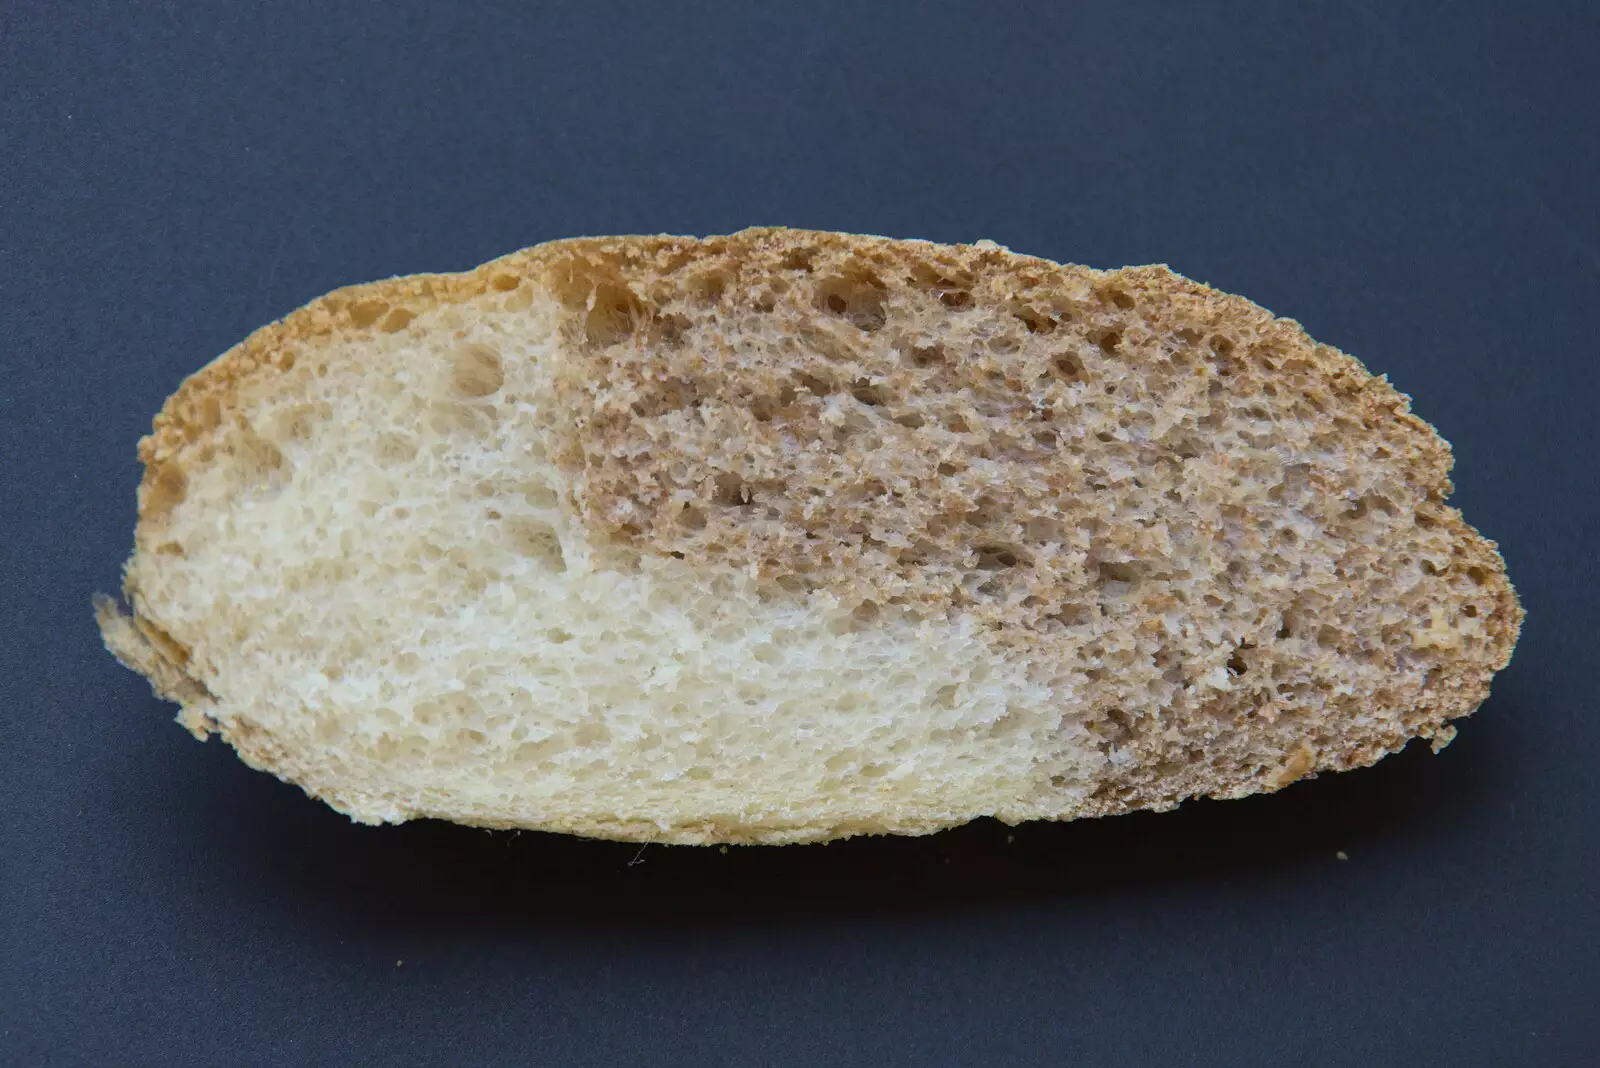 Home-made Yin-Yang 'hybrid' bread, from A Trip to the Blue Shop, Church Street, Eye, Suffolk - 2nd February 2021